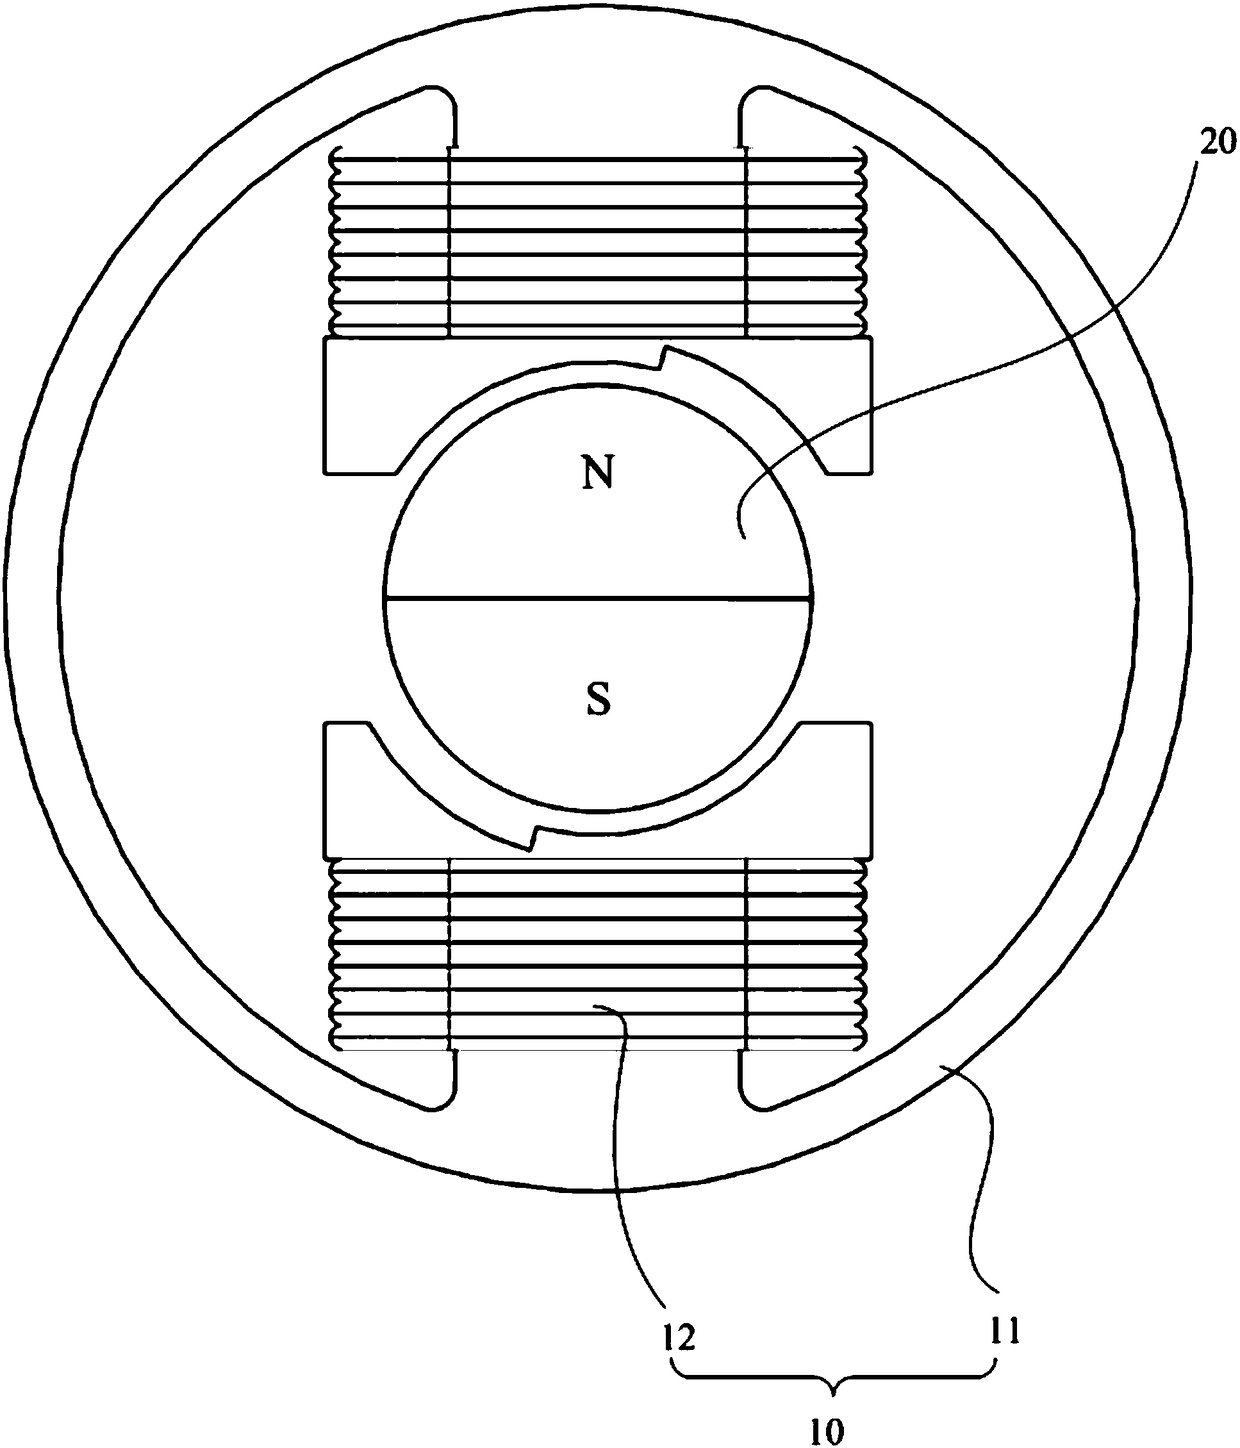 Single-phase permanent magnet alternating current motor